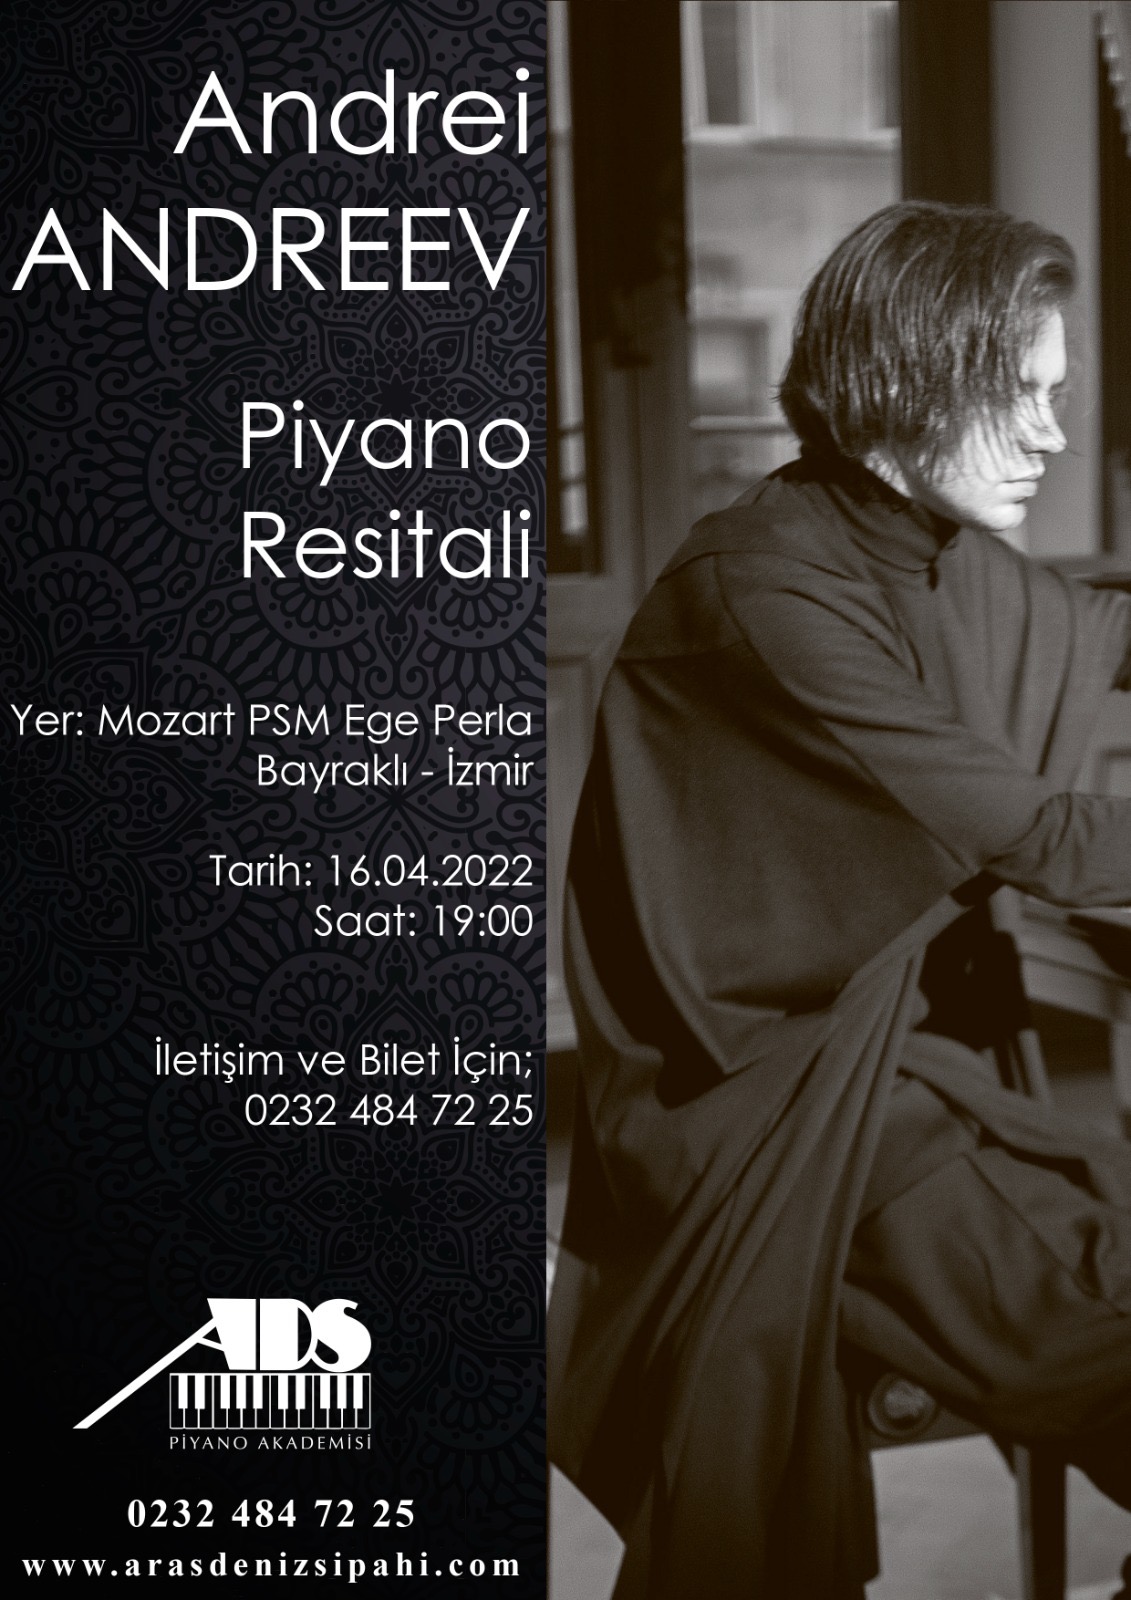 Andrei ANDREEV Piyano Resitali, ADS Piyano Akademisi Organizasyonuyla Ege Perla'da!